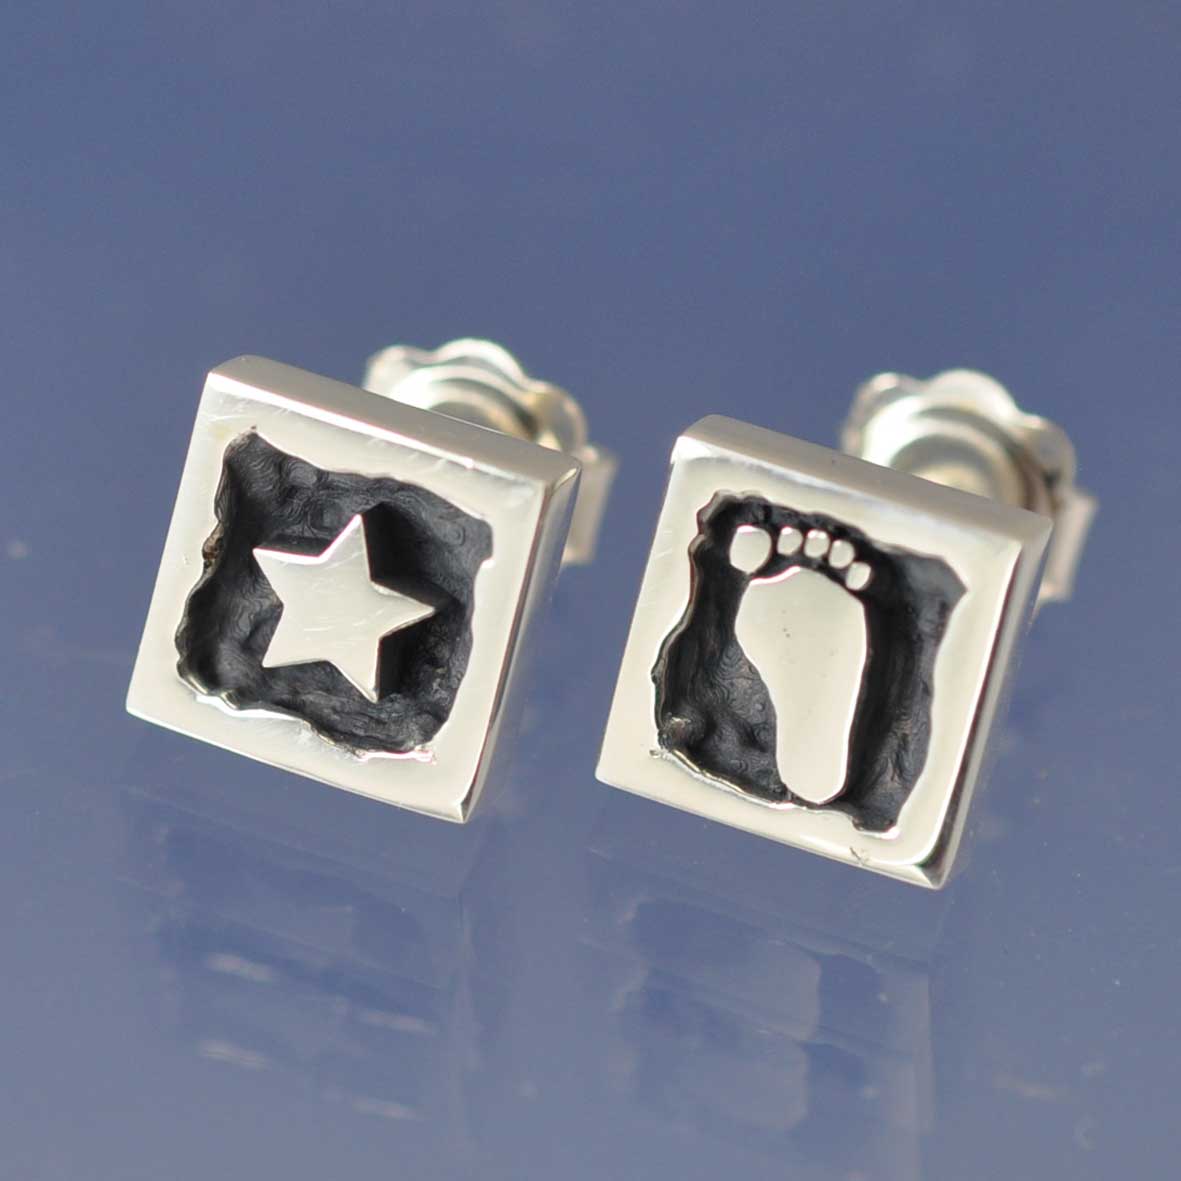 Your Footprint Earrings - Custom Earring by Chris Parry Jewellery